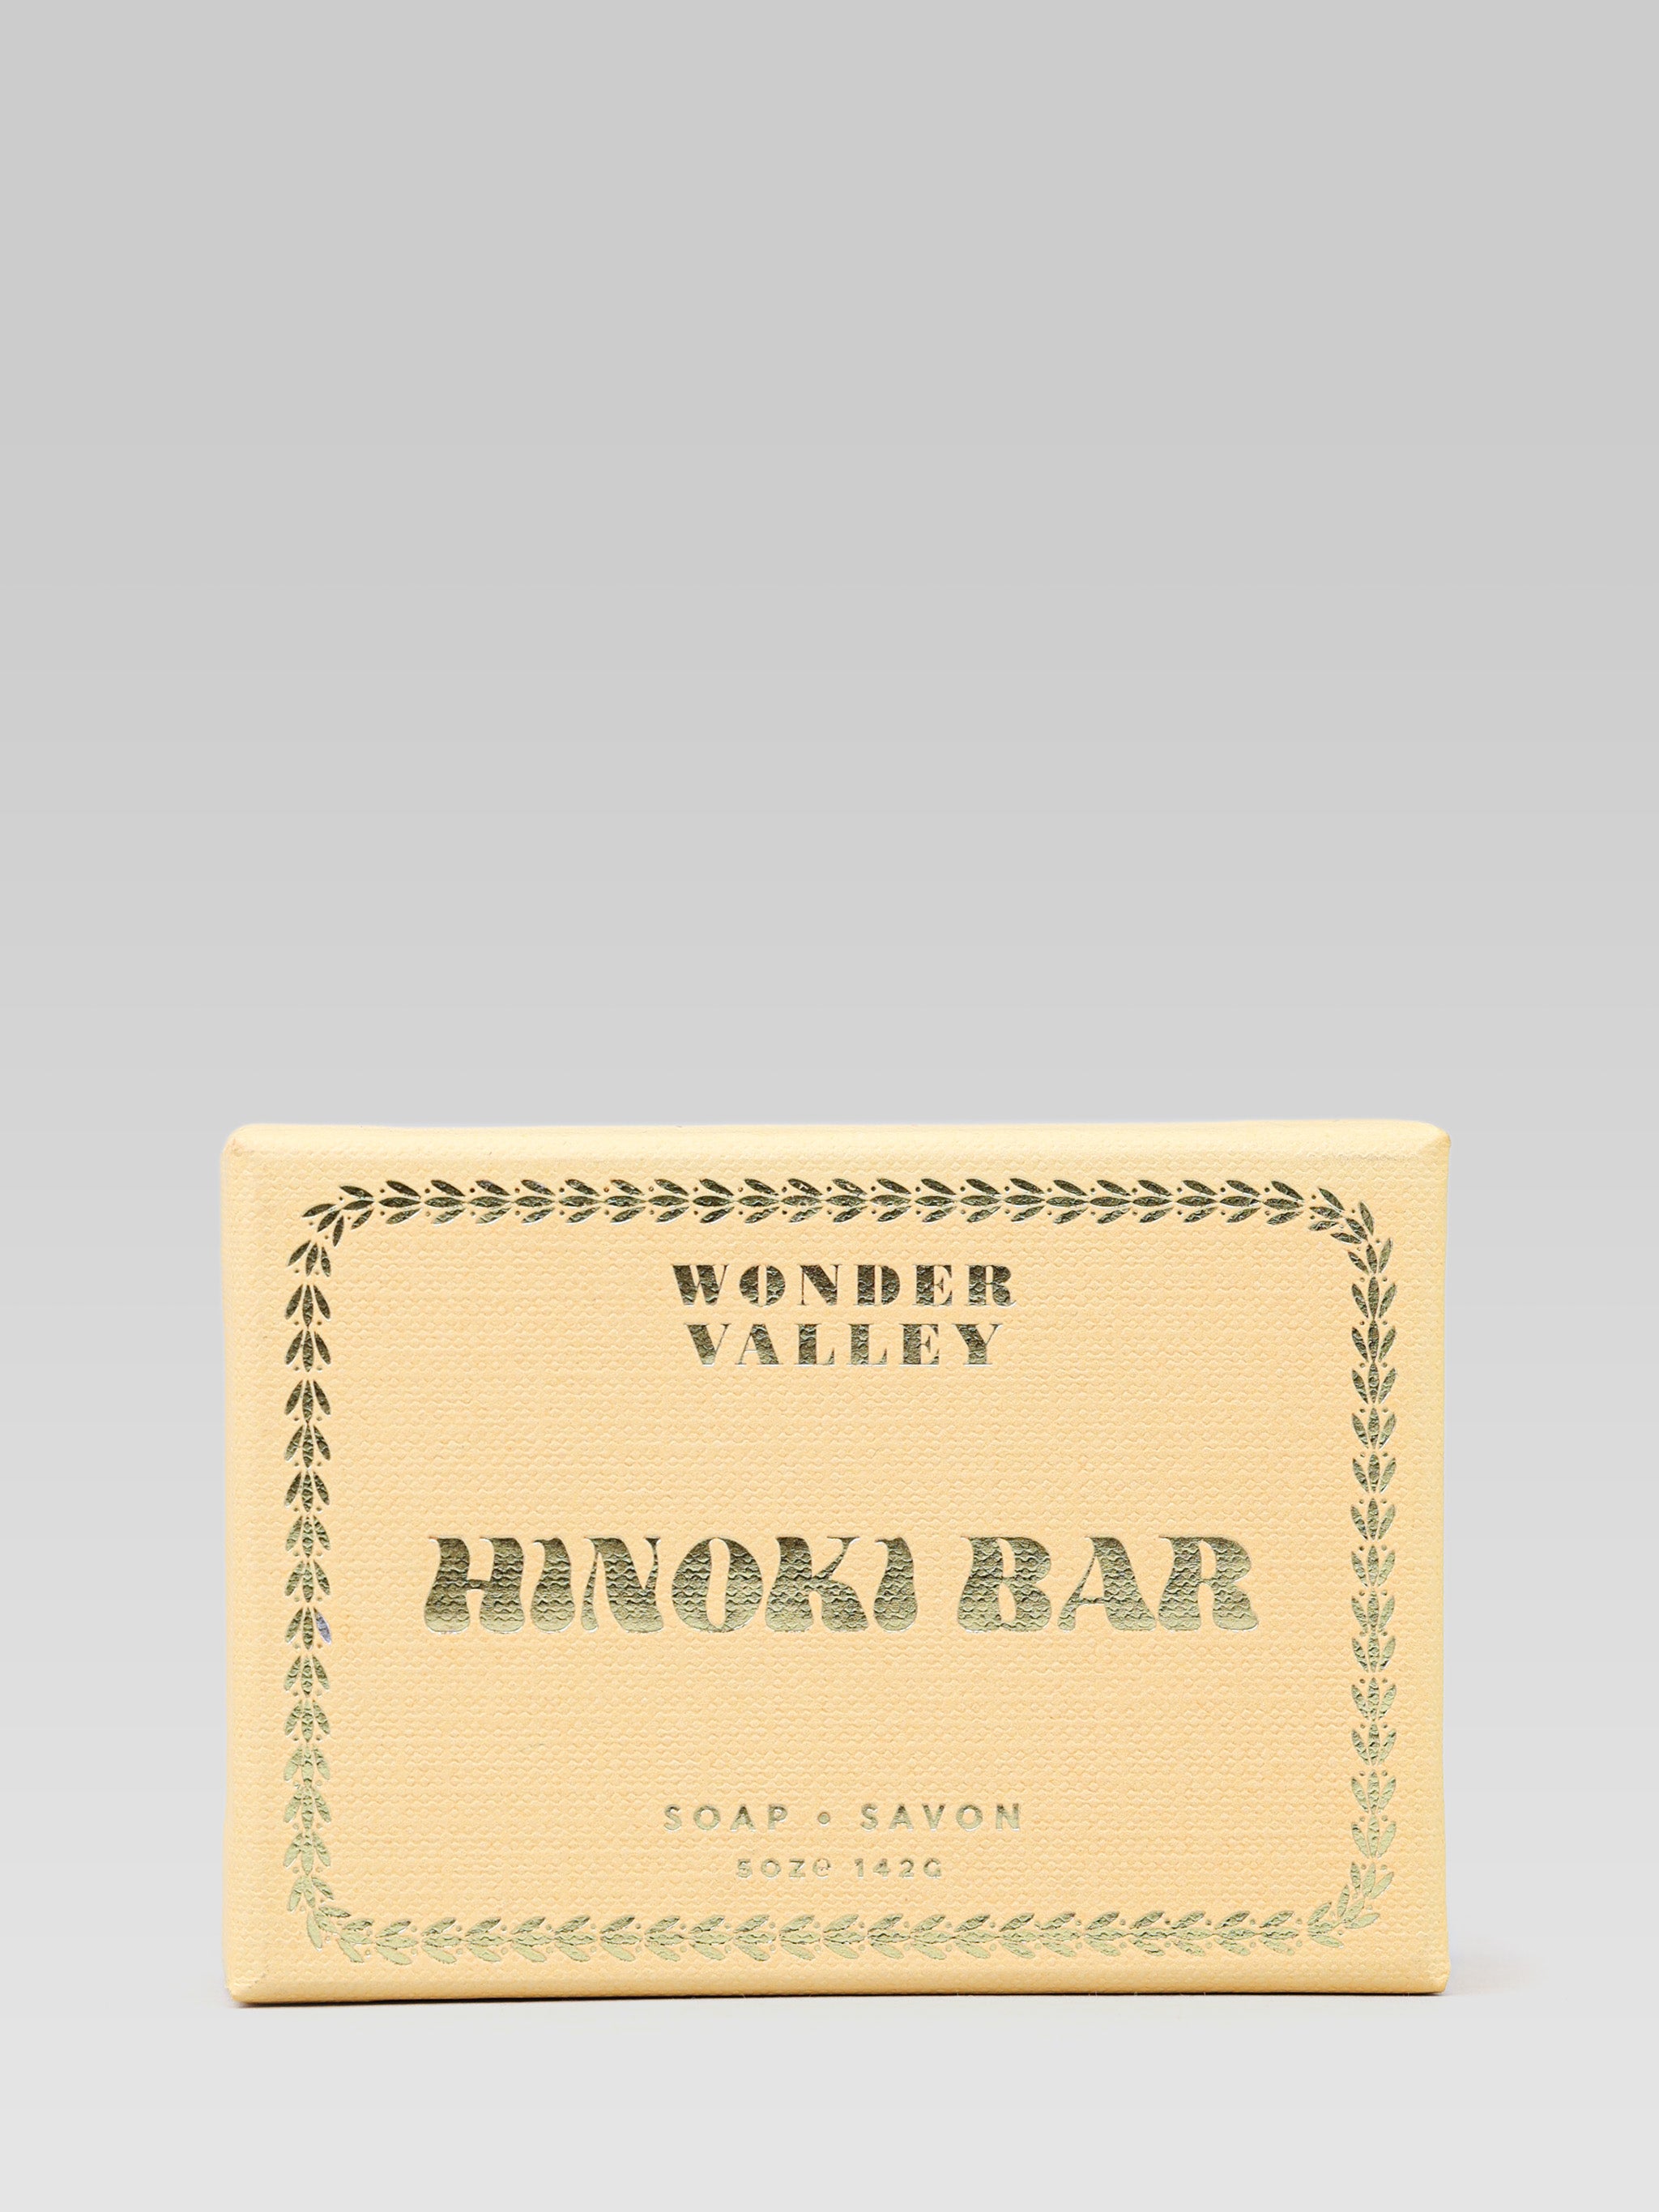 WONDER VALLEY Hinoki Bar product packaging